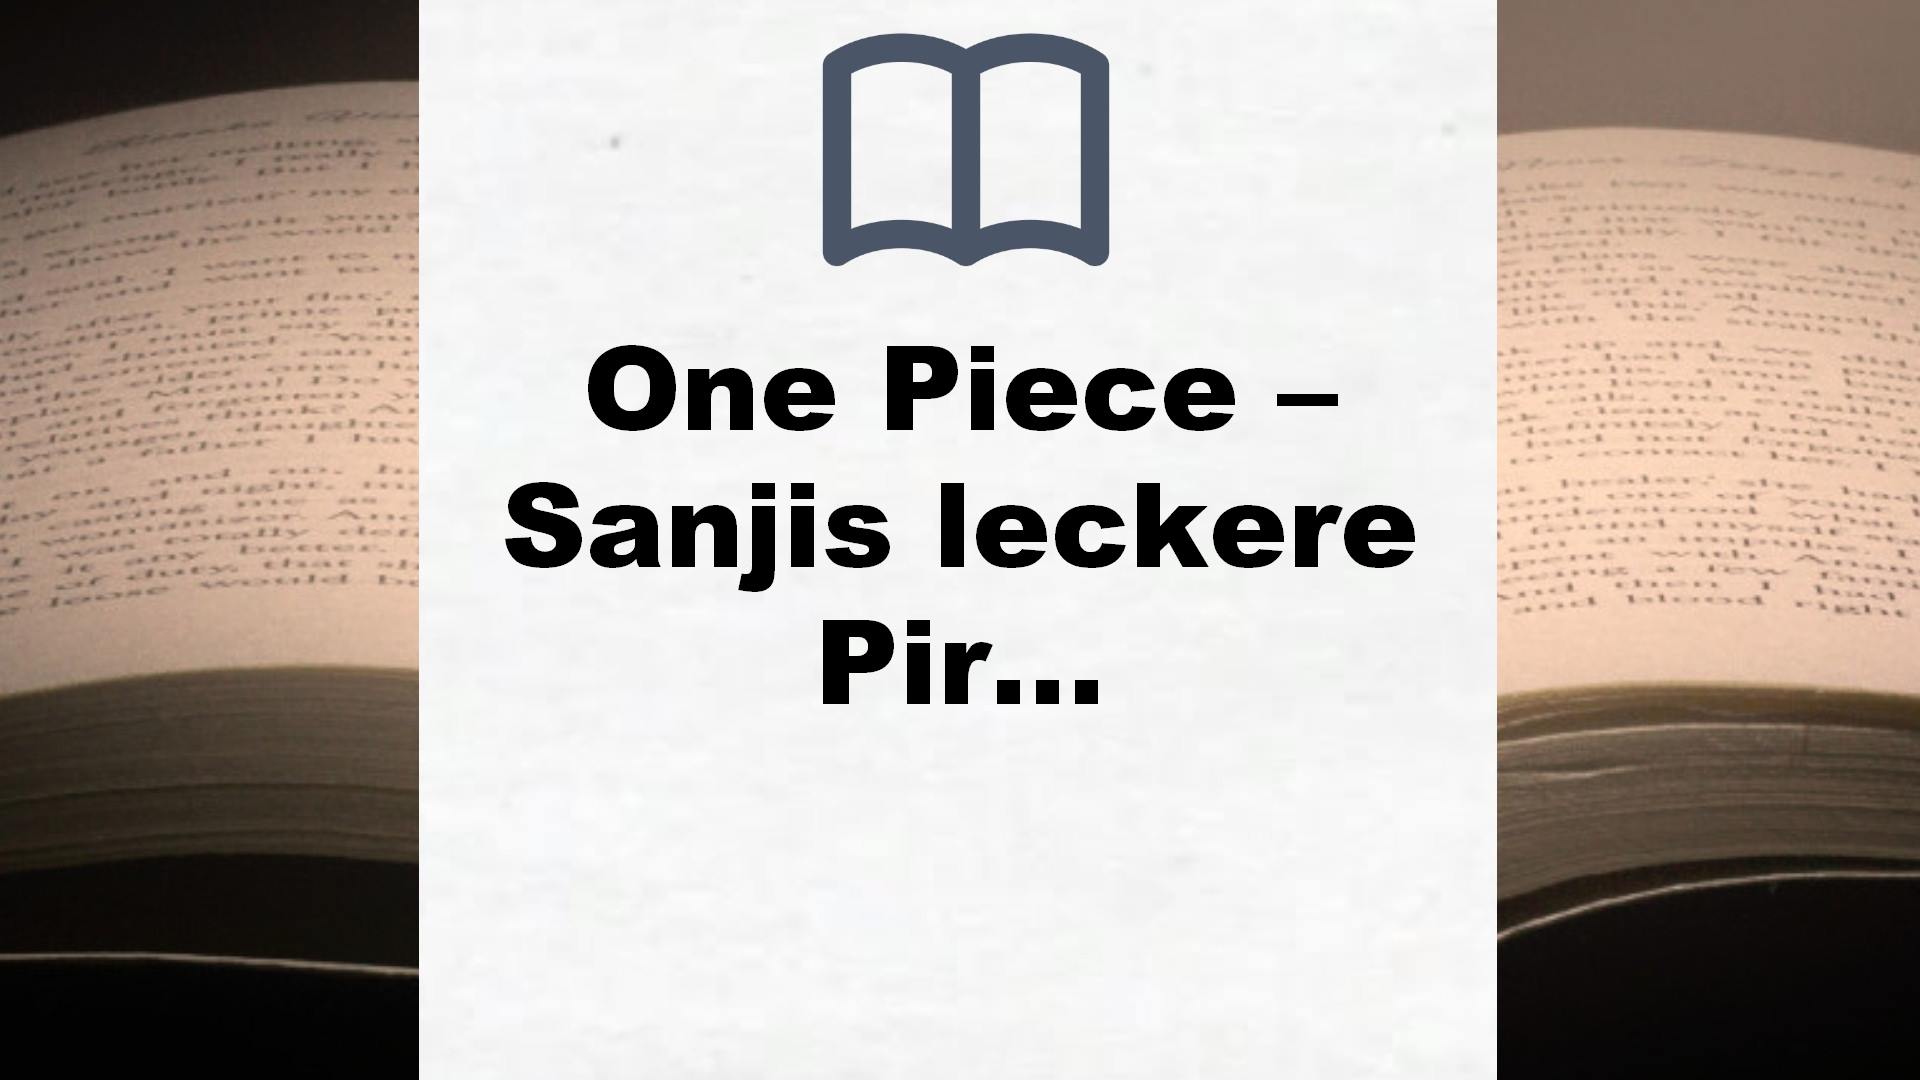 One Piece – Sanjis leckere Piratenrezepte – Buchrezension